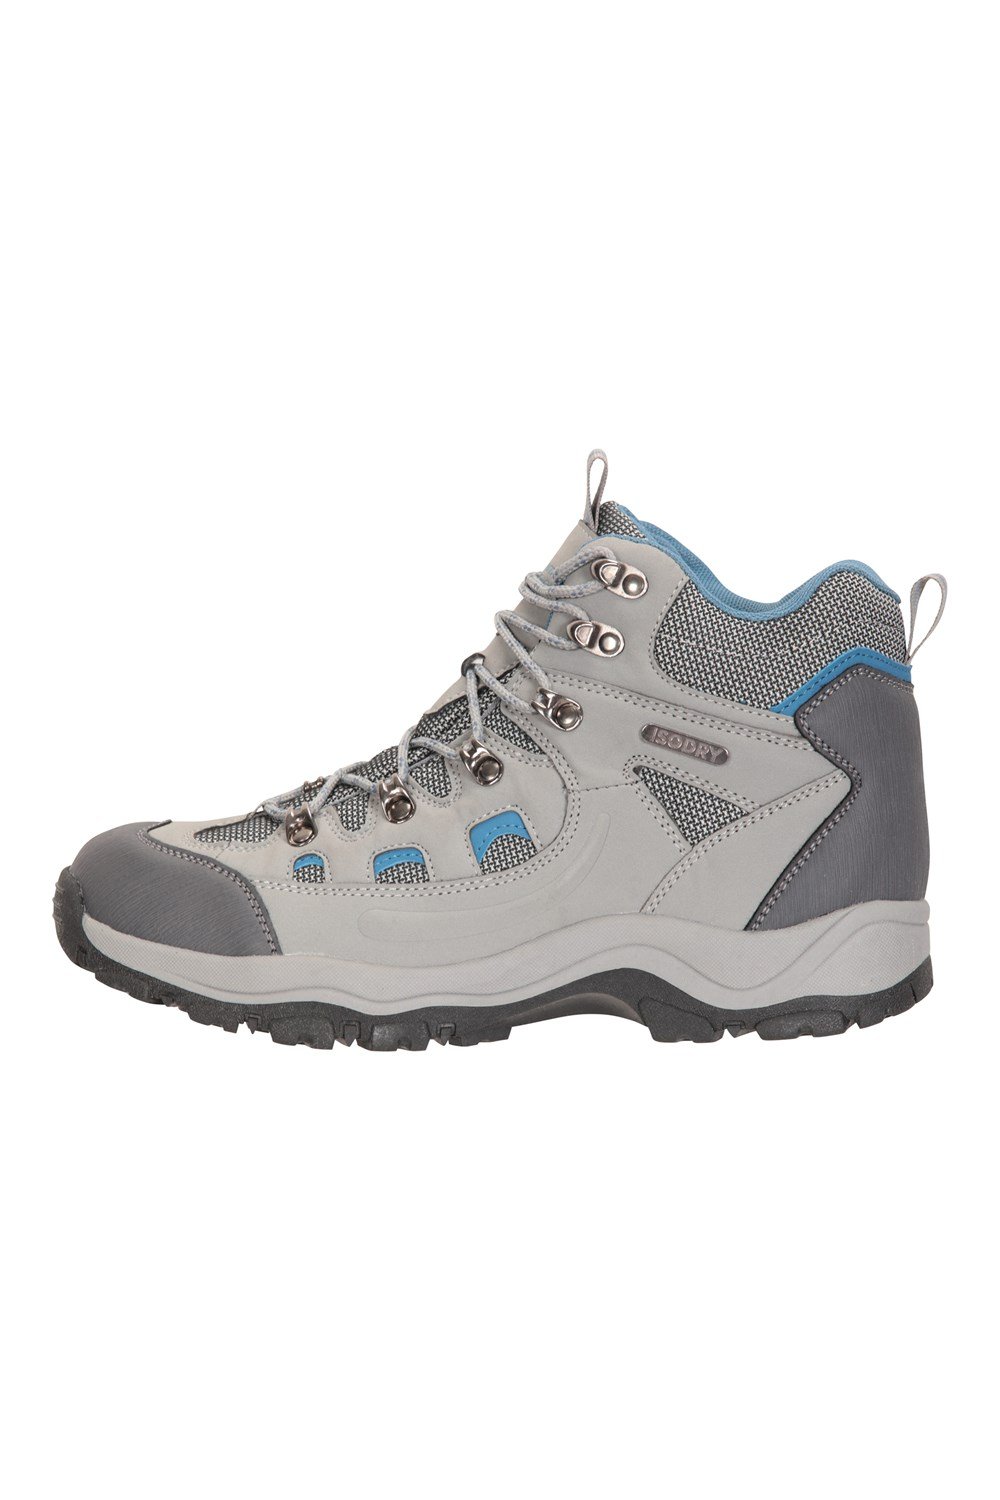 miniature 51 - Mountain Warehouse Womens Waterproof Hiking Boots Walking Trekking Ladies Boot